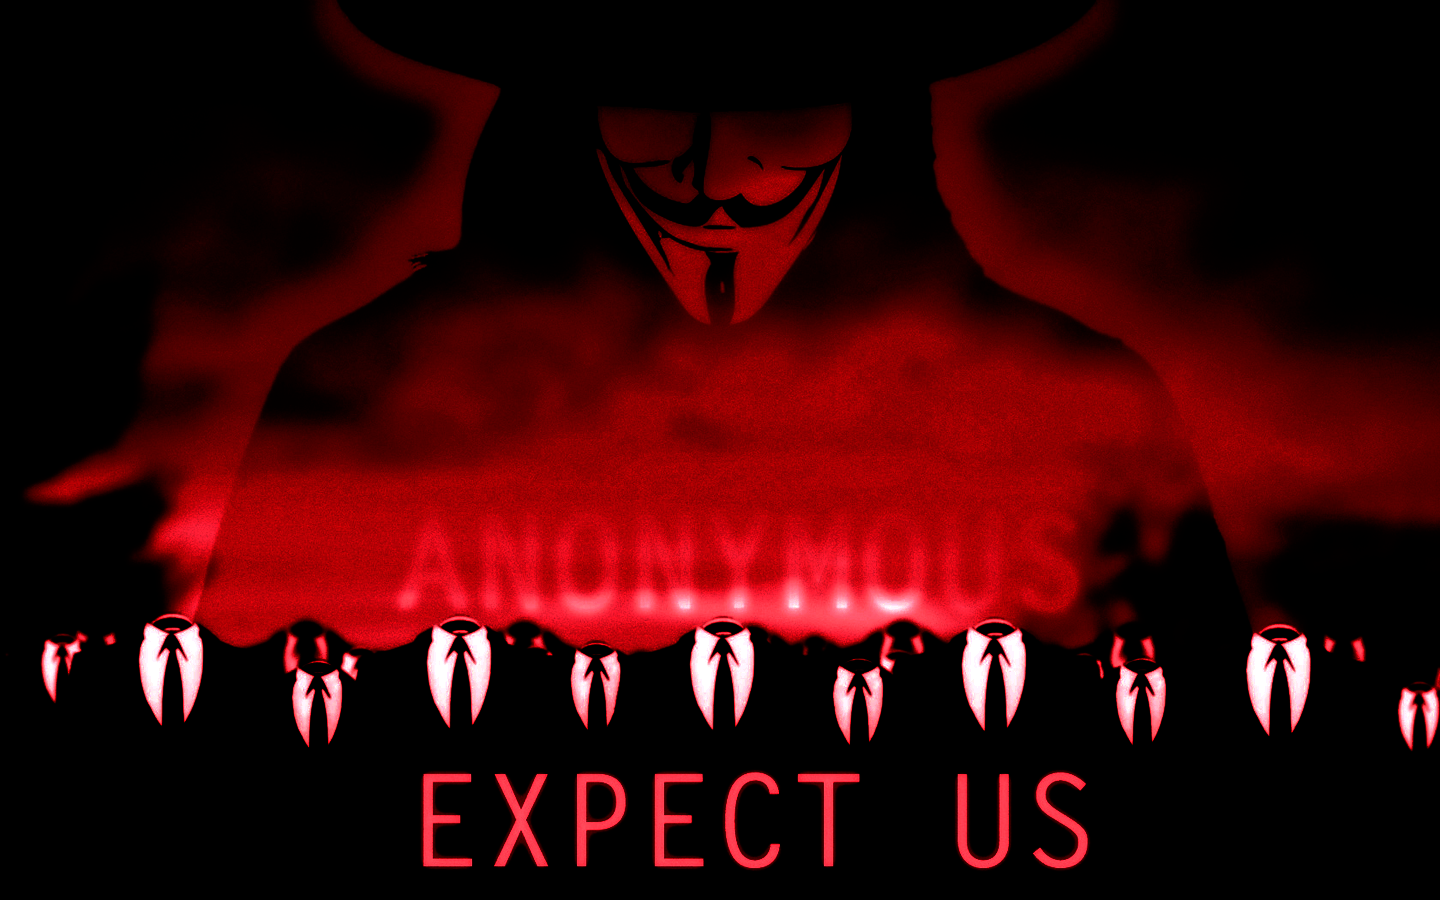 Anonymous Hacking Desktop Wallpapers - Wallpaper Cave